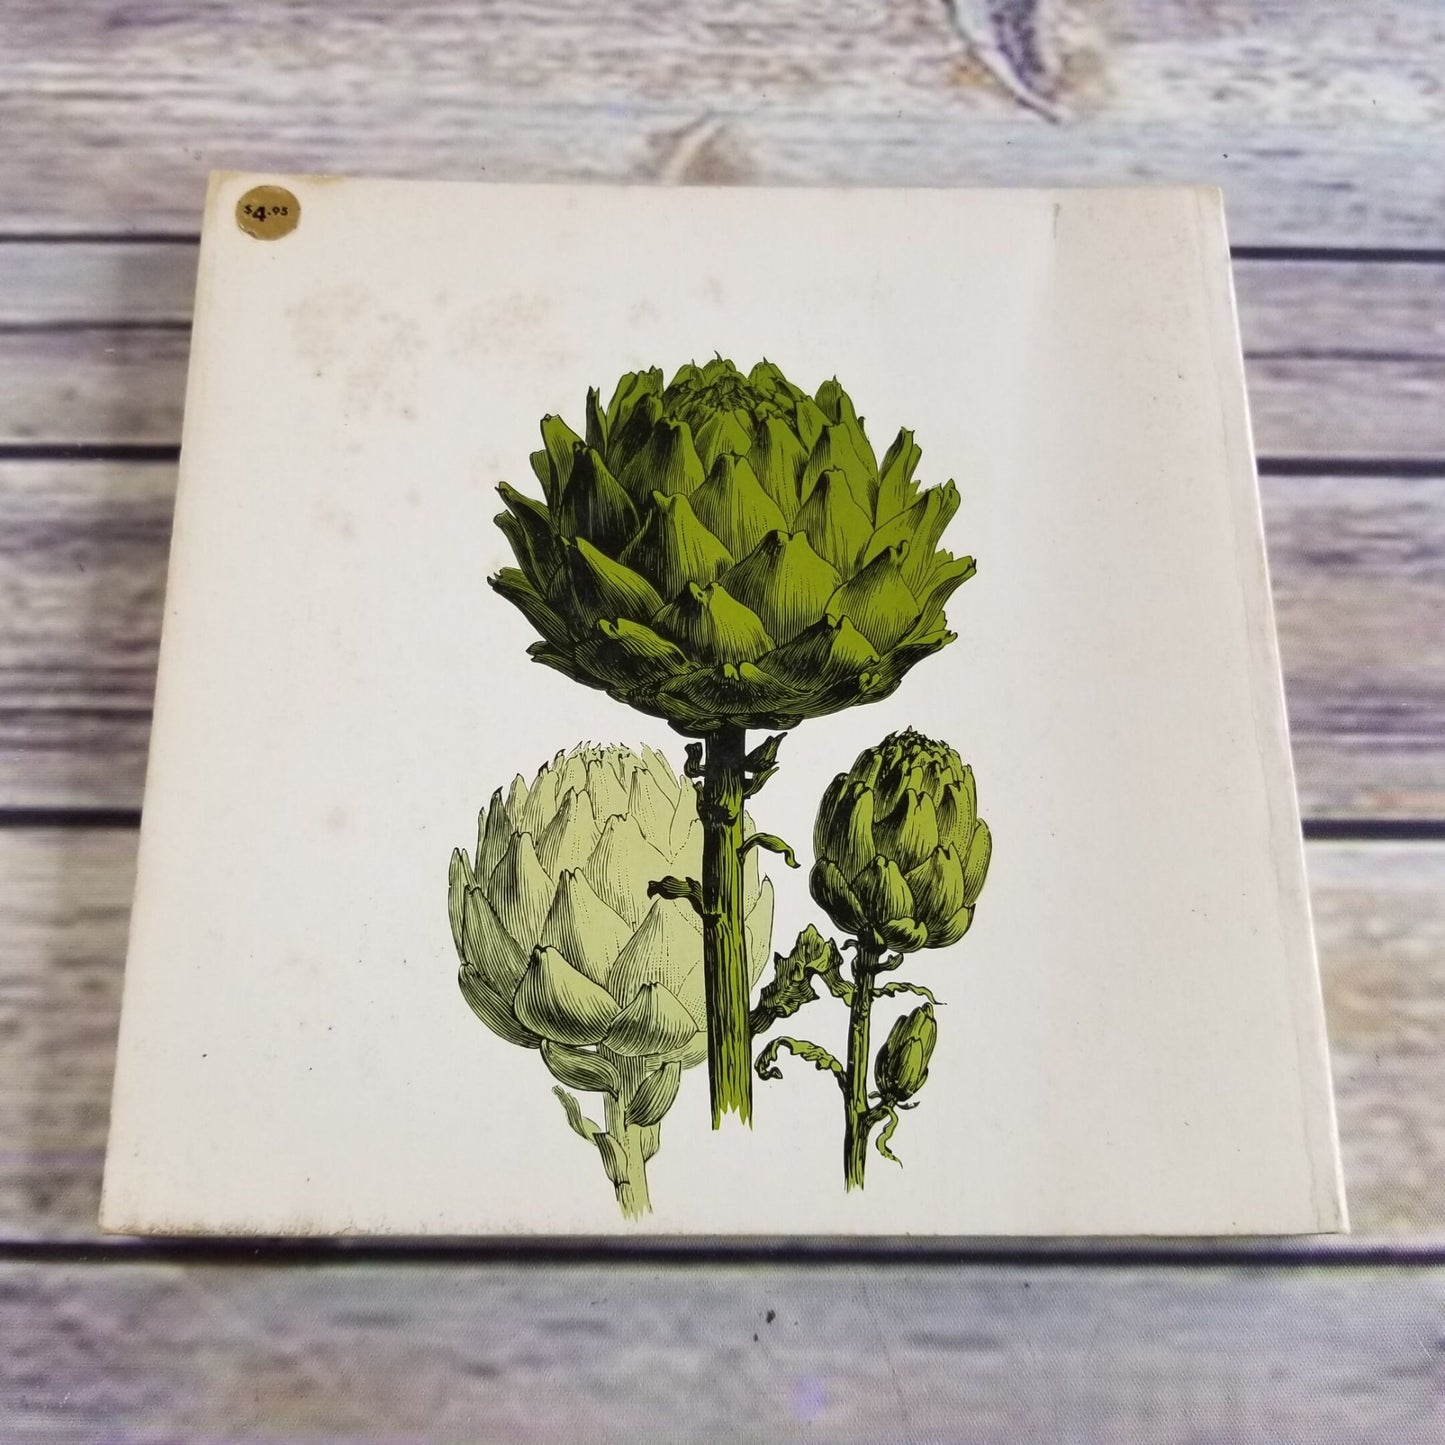 Vintage Vegetable Cookbook 1975 Recipes The Edible Ornamental Garden Paperback John Bryan and Coralie Castlle